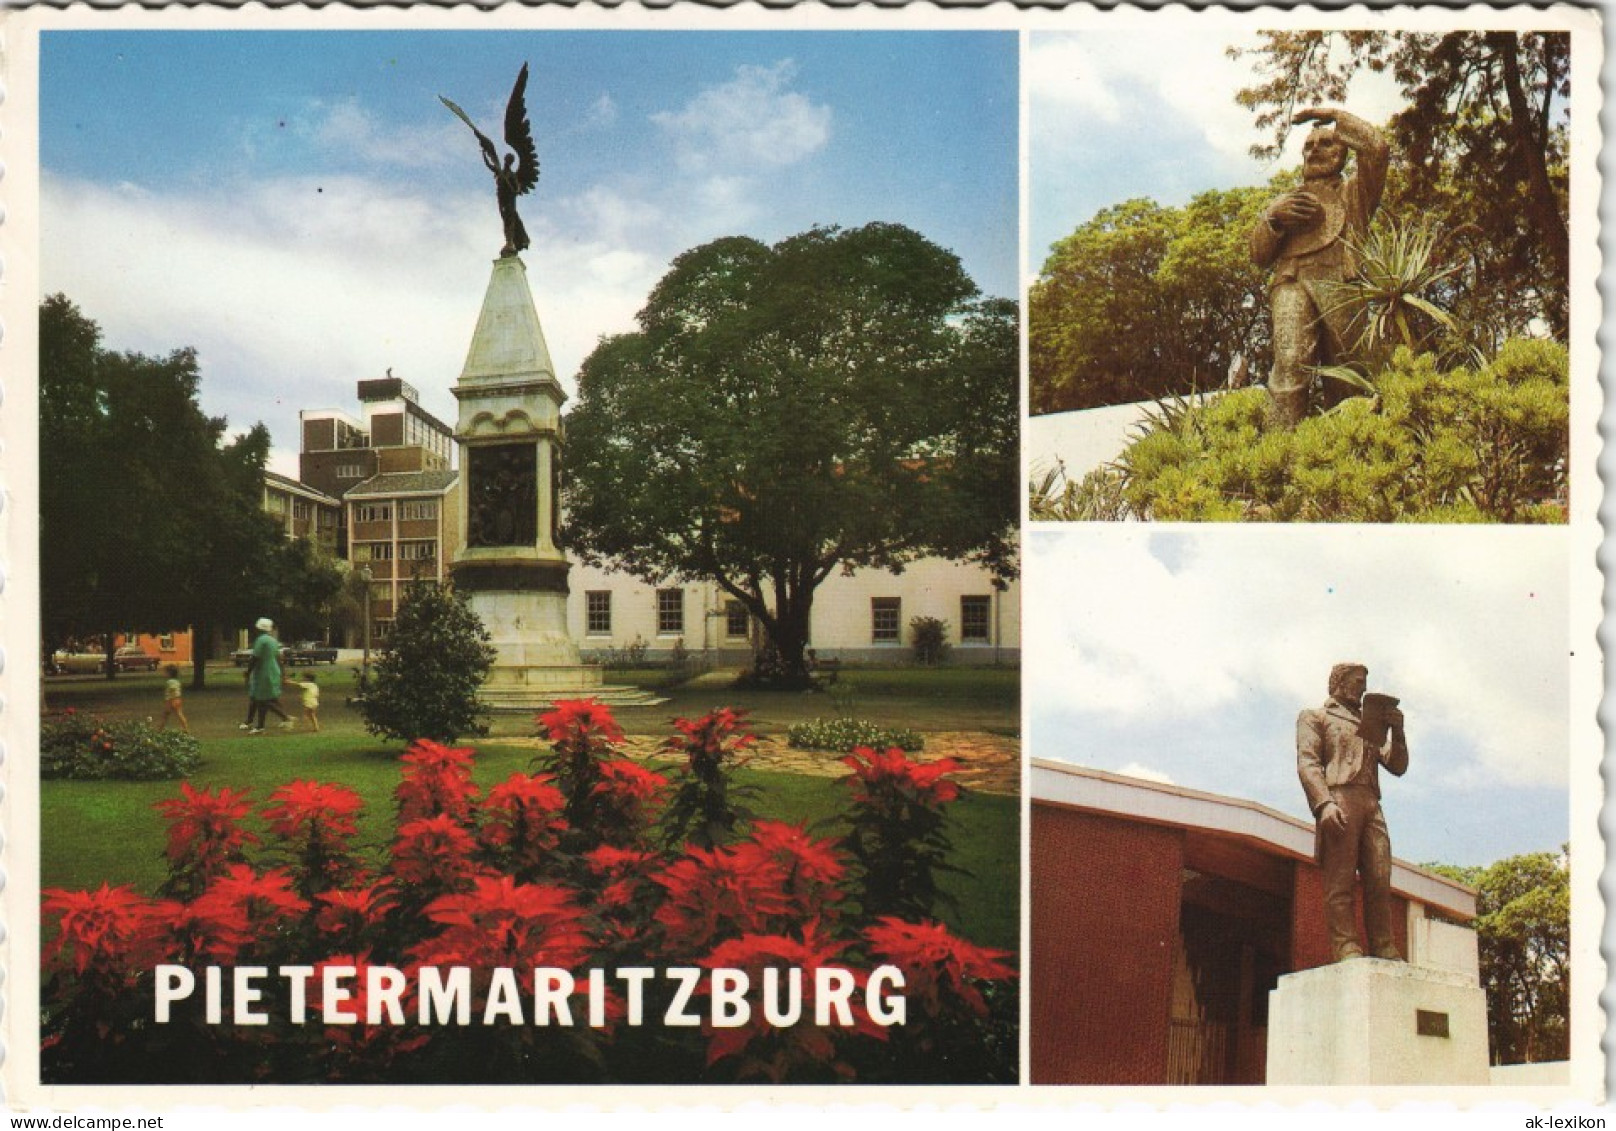 Pietermaritzburg MB: Boer War Monument, Piet Retief Statue  Maritz Statue 1975 - South Africa